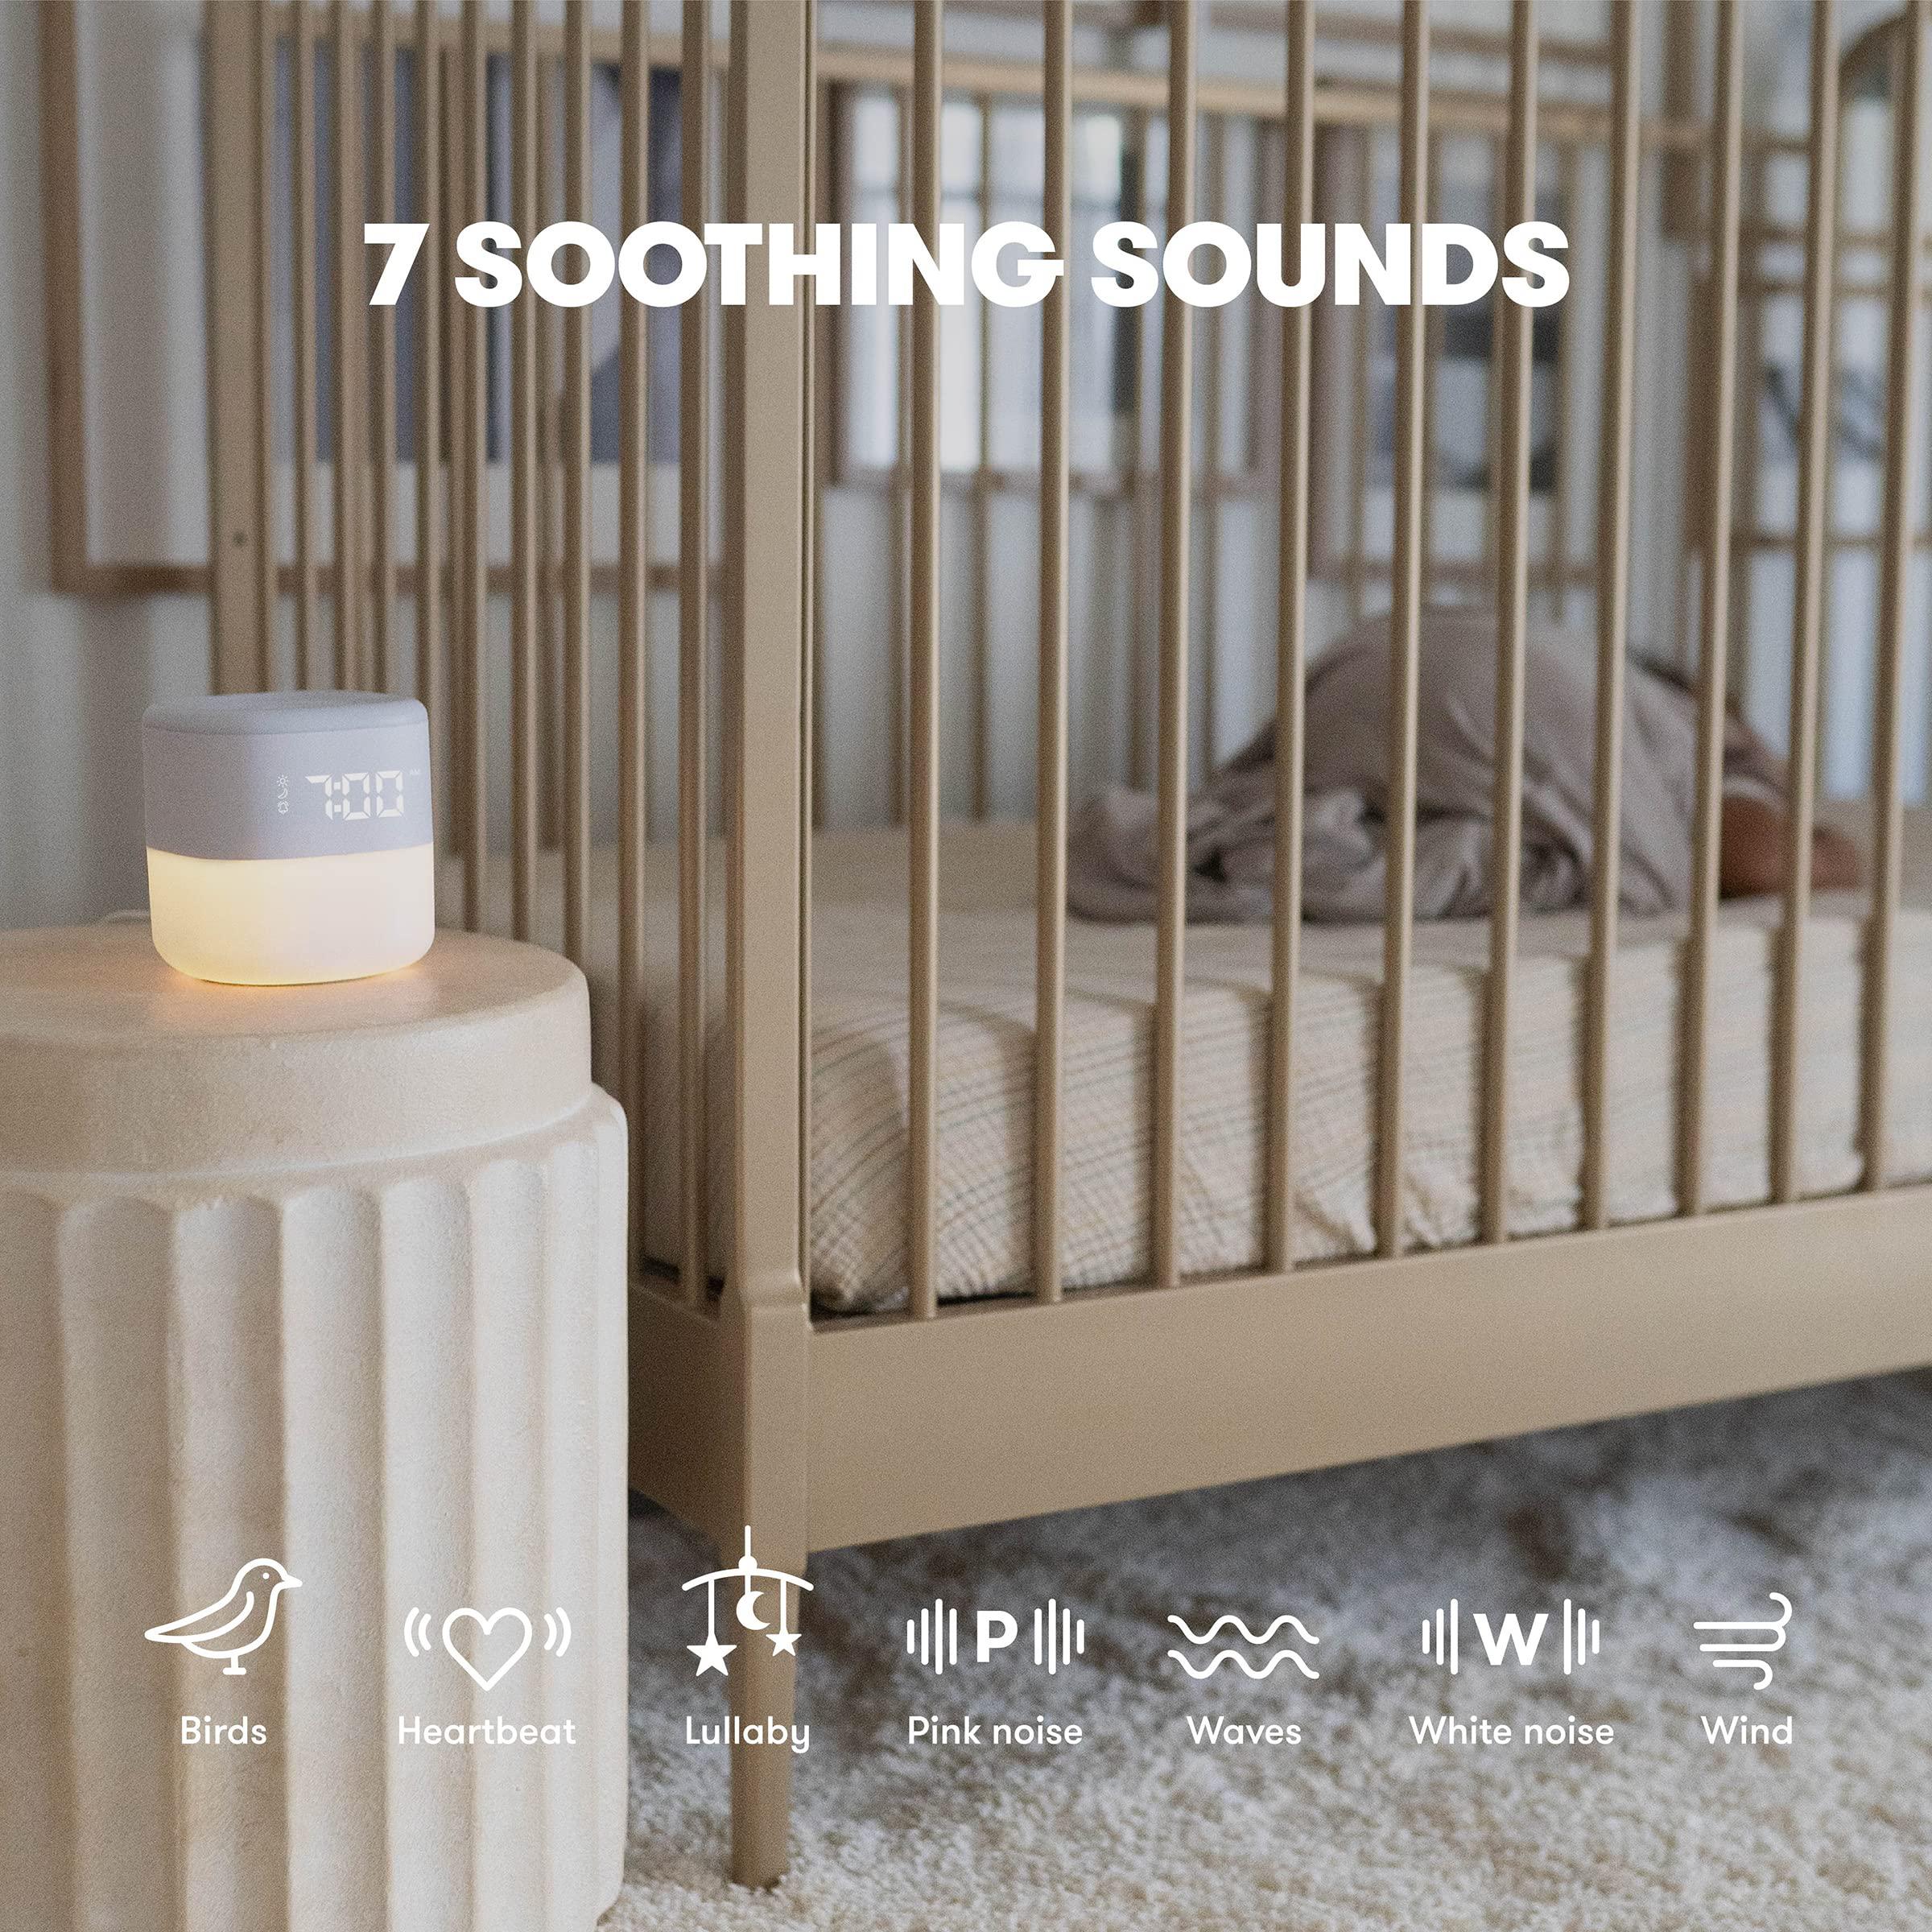 frida baby 3-in-1 sound machine + when-to-wake clock + nightlight | white noise soother, sleep trainer, alarm clock, nursery 